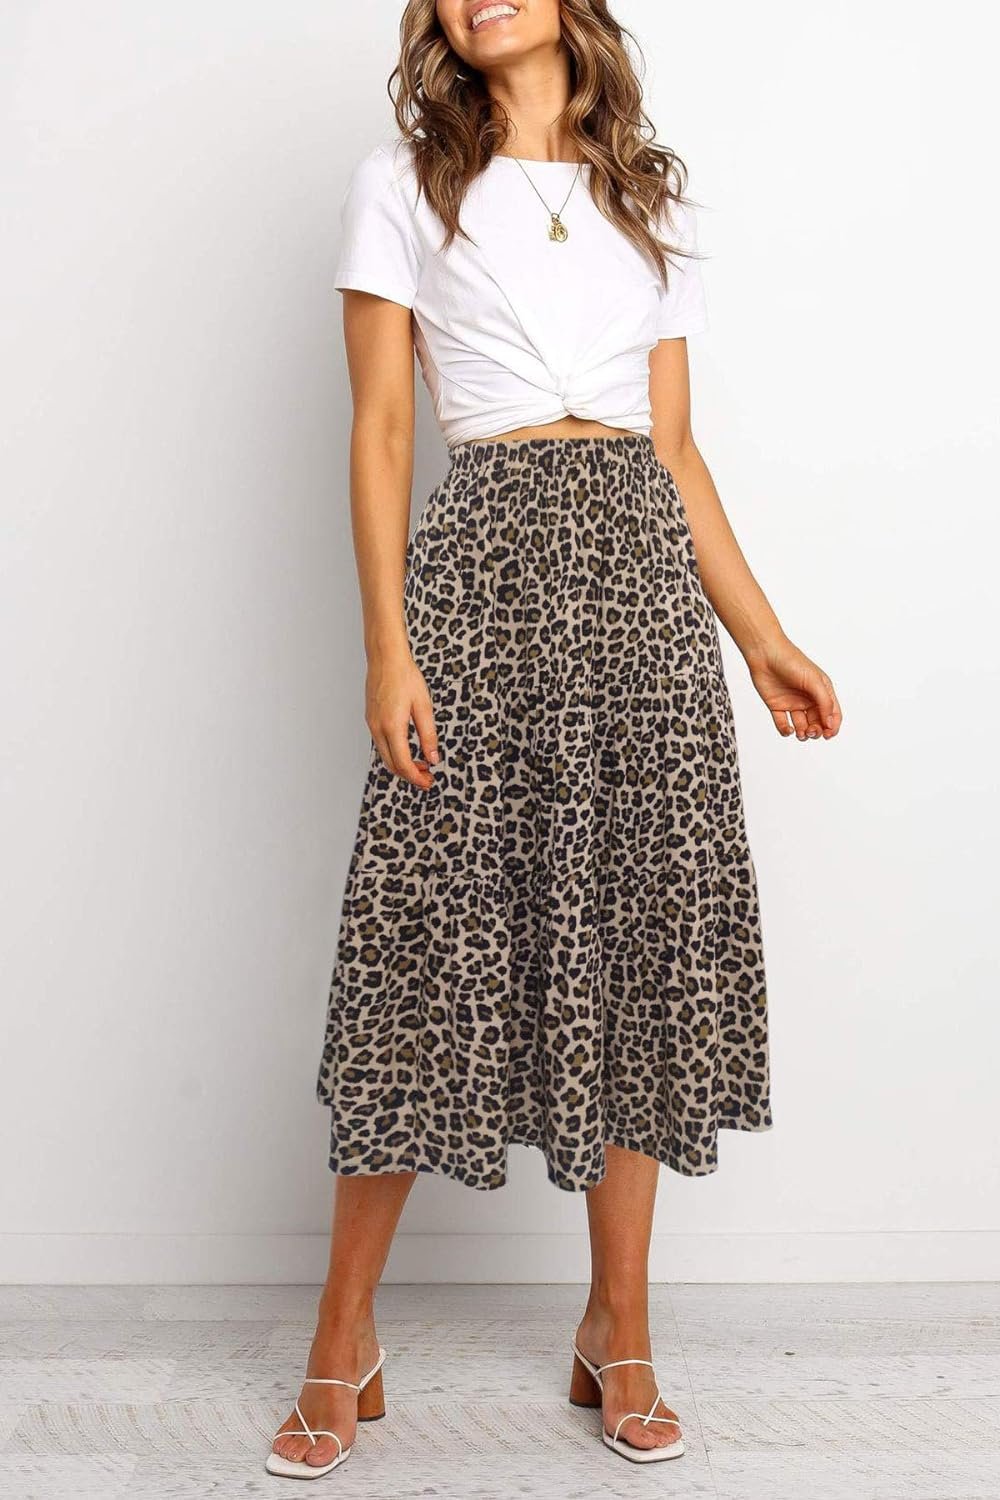 MEROKEETY Womens Boho Leopard Print Skirt Pleated A-Line Swing Midi Skirts